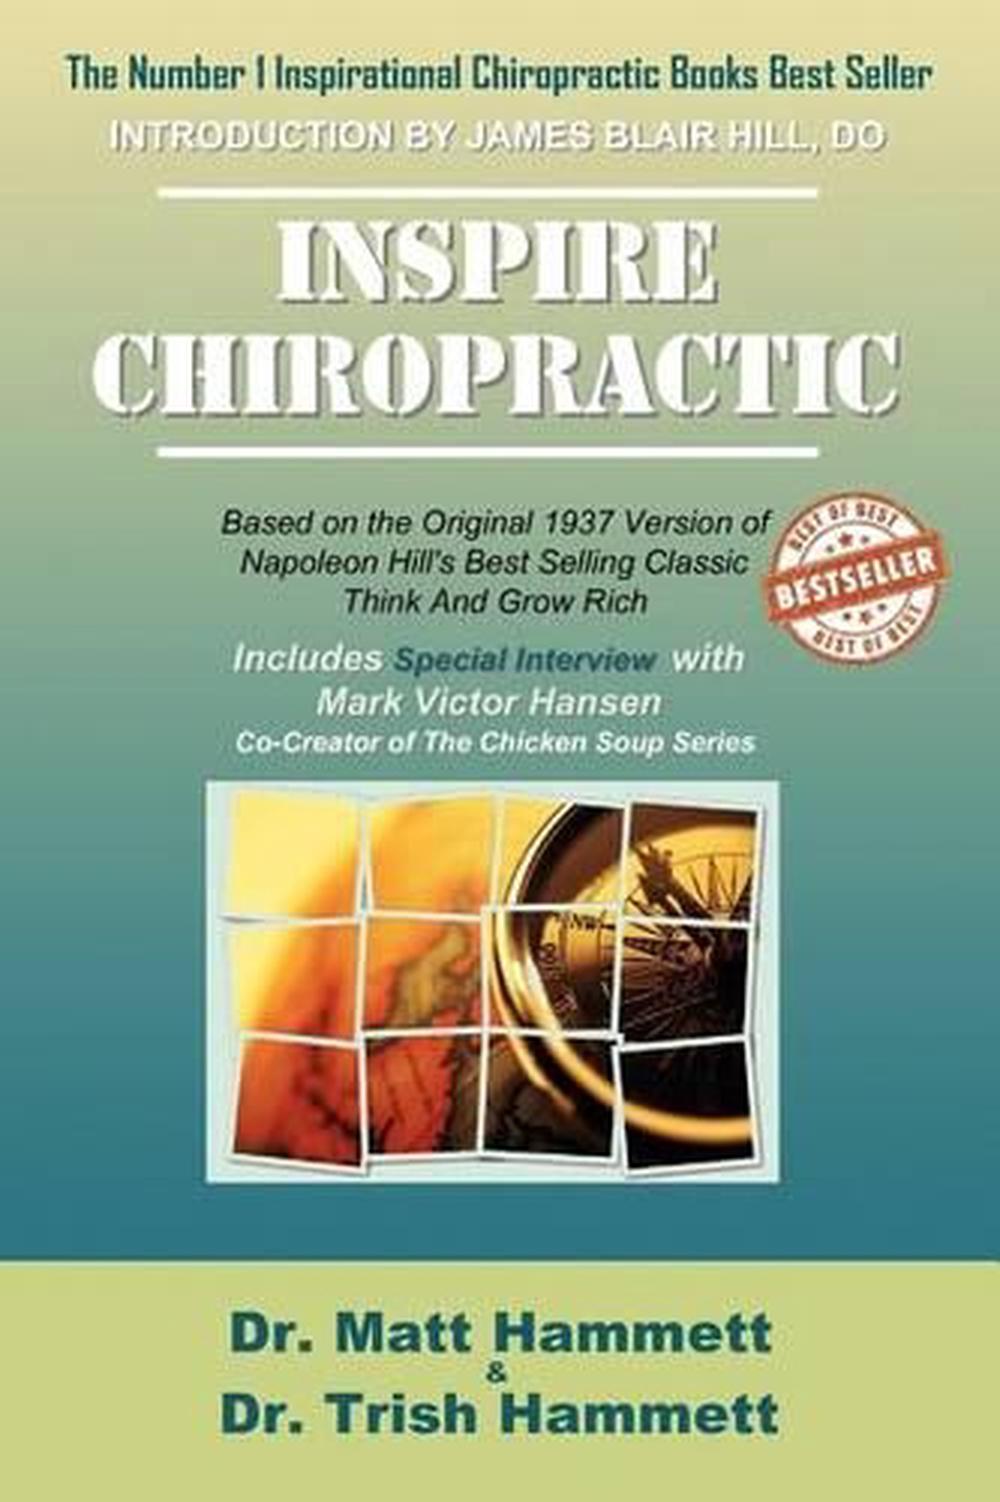 chiropractic greenbooks